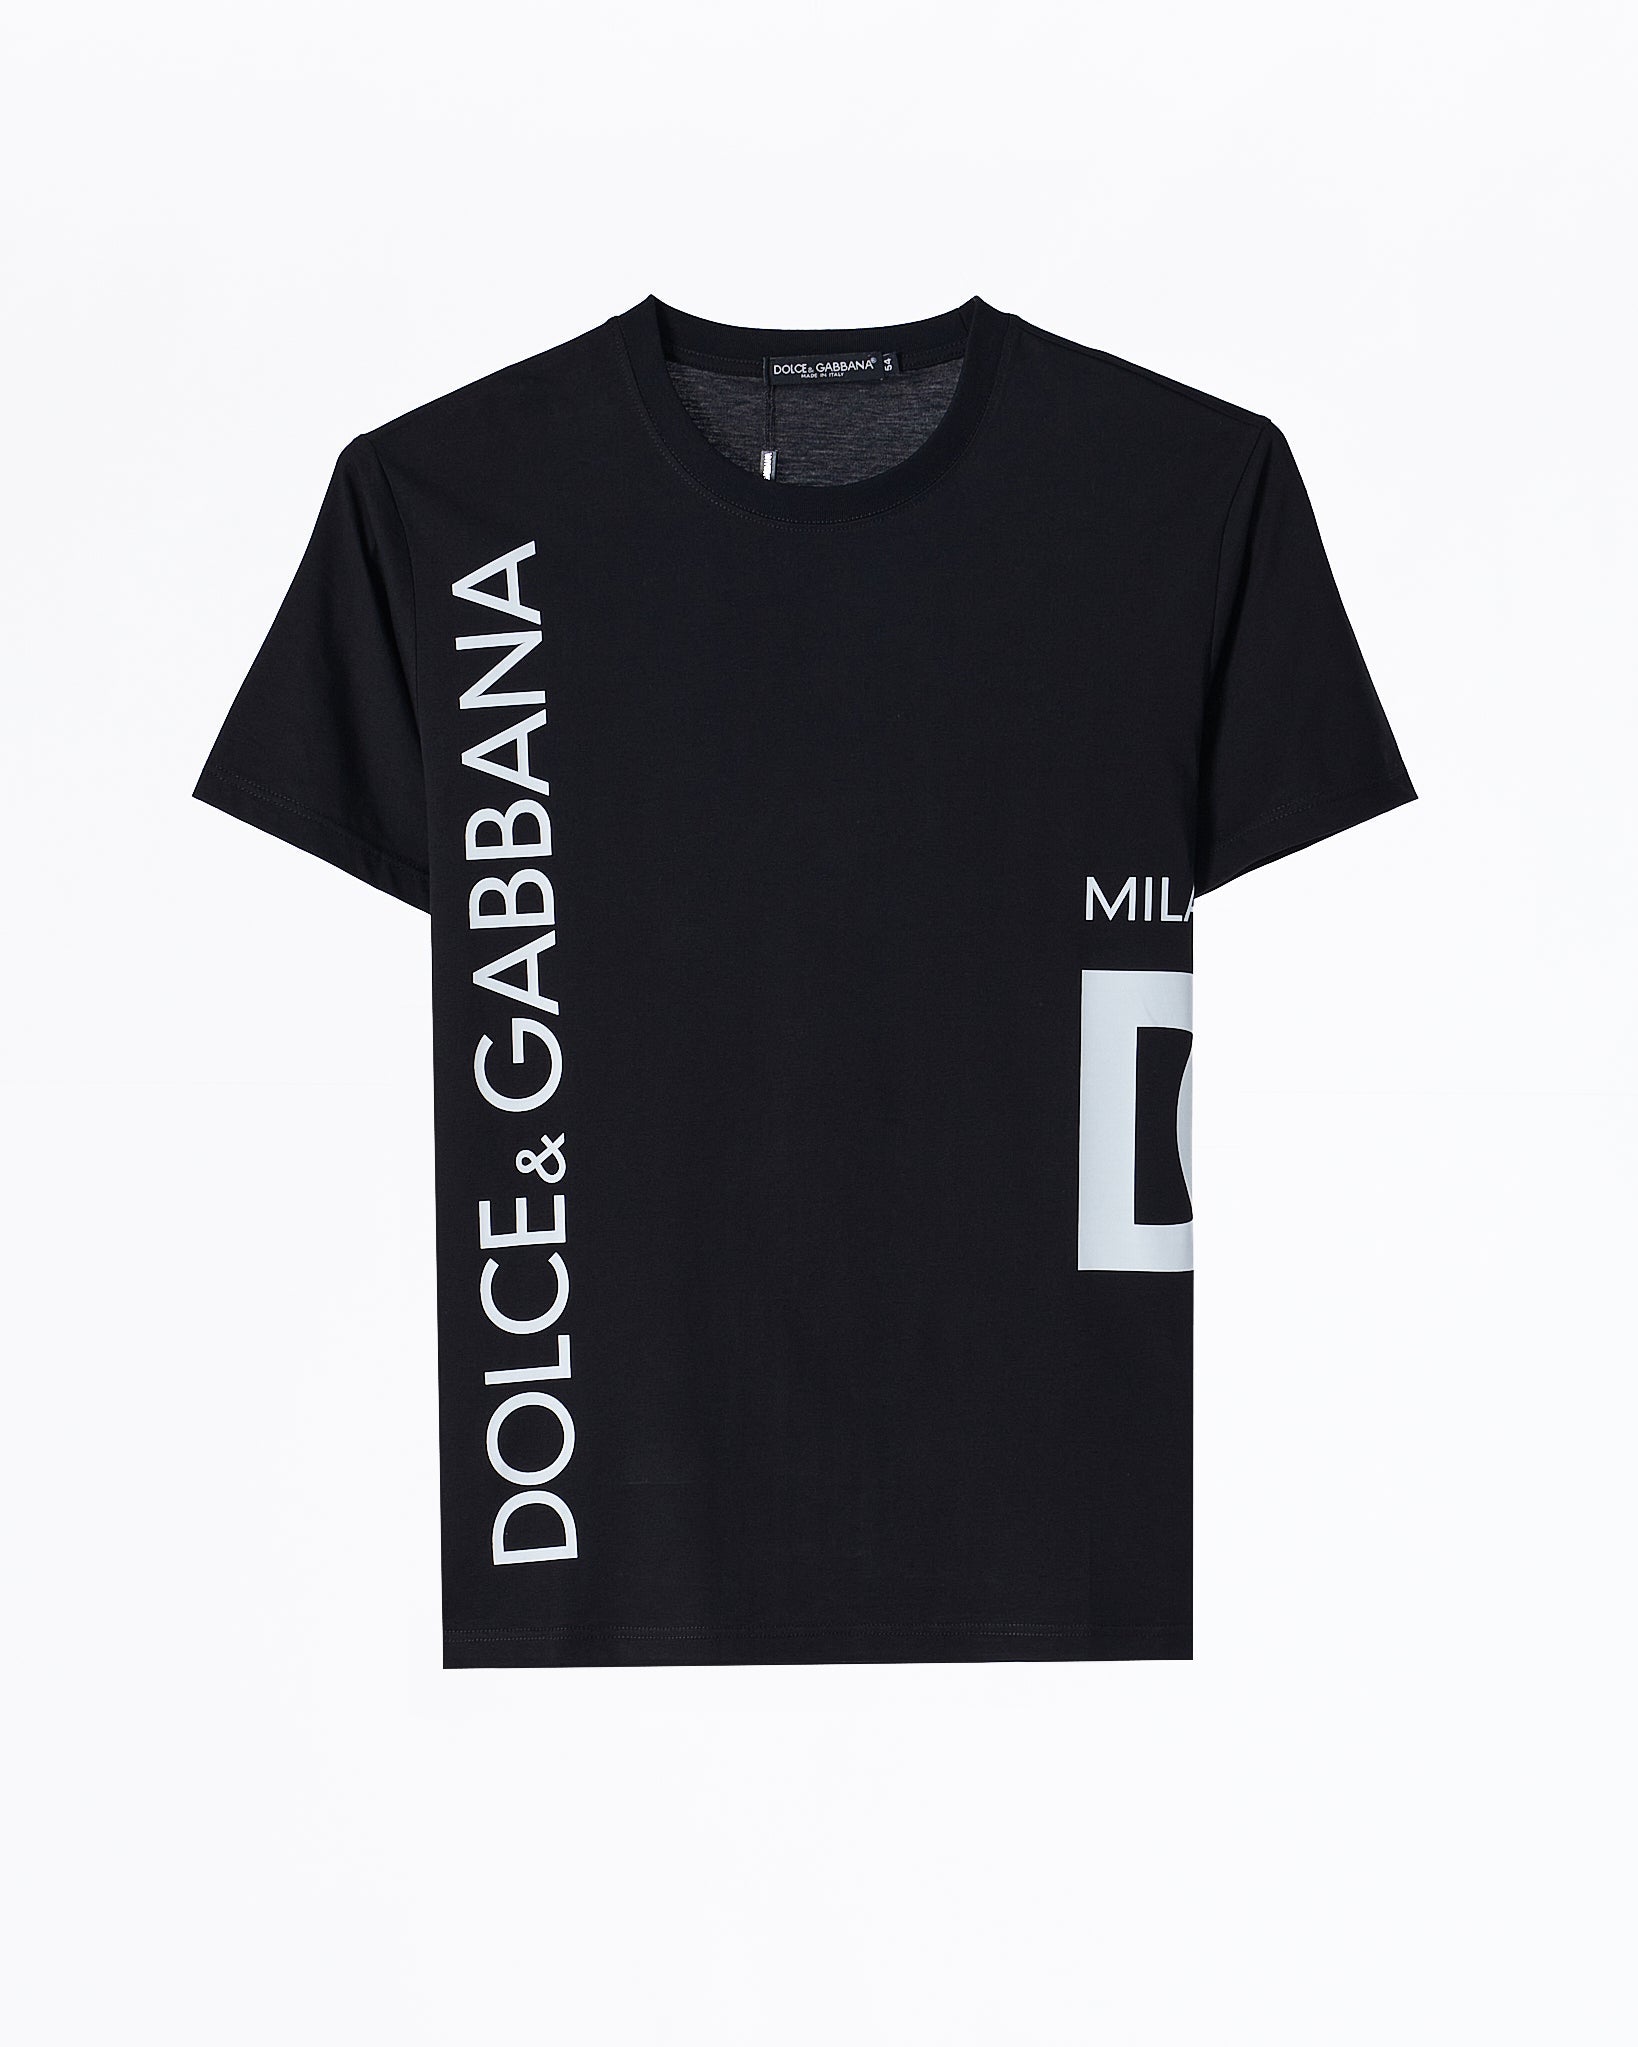 MOI OUTFIT-DG Milan Men Black T-Shirt 57.90